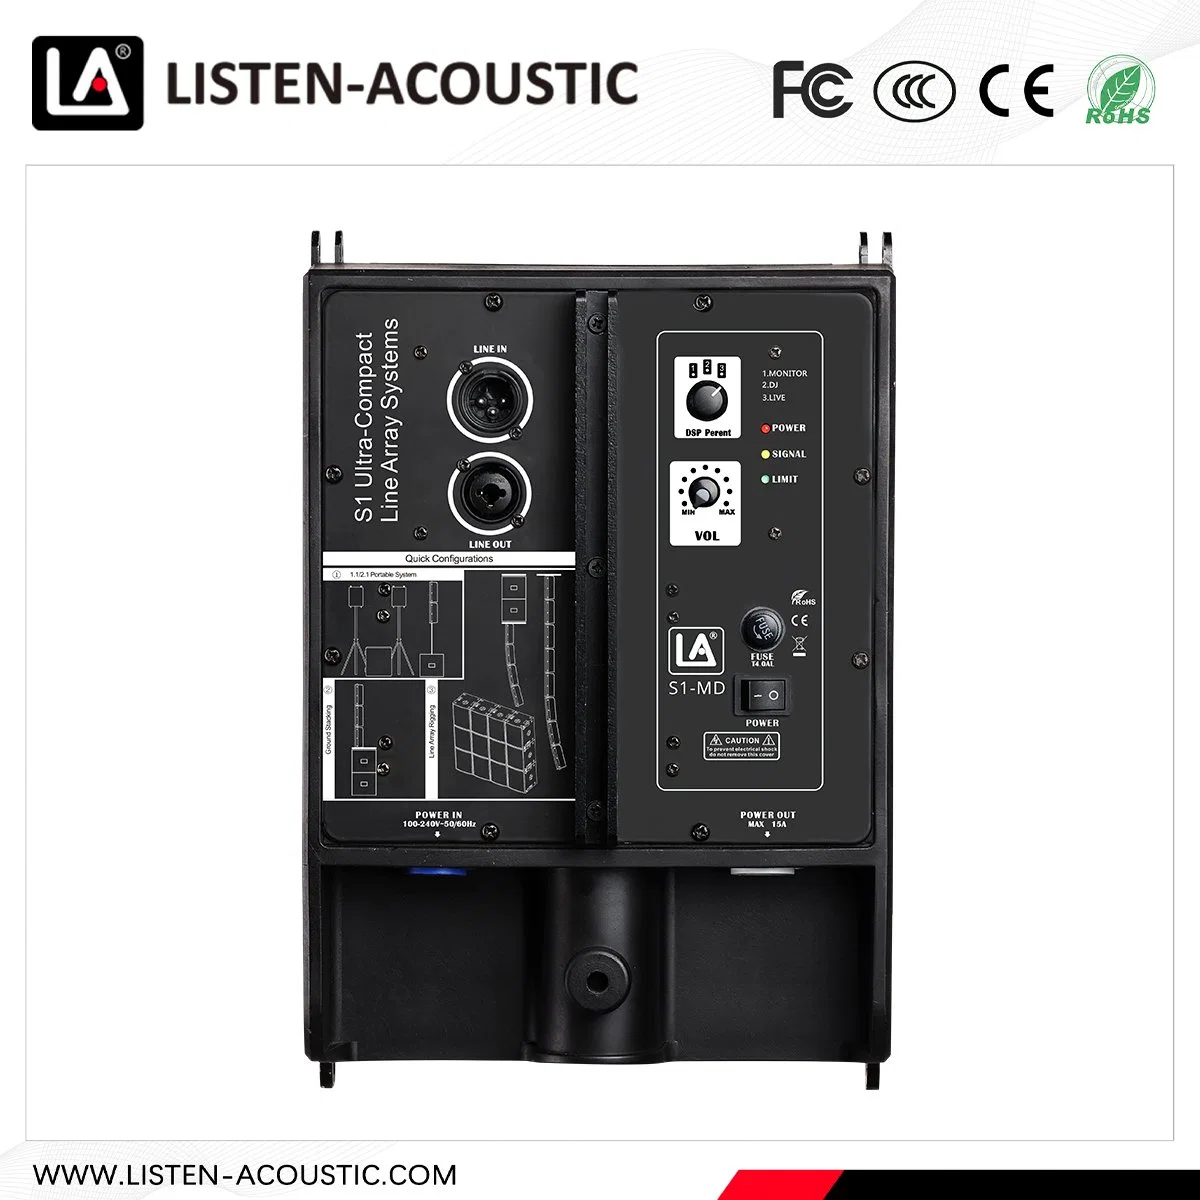 Professional Audio Lautsprecher S1 Stage Equipment Line Array System